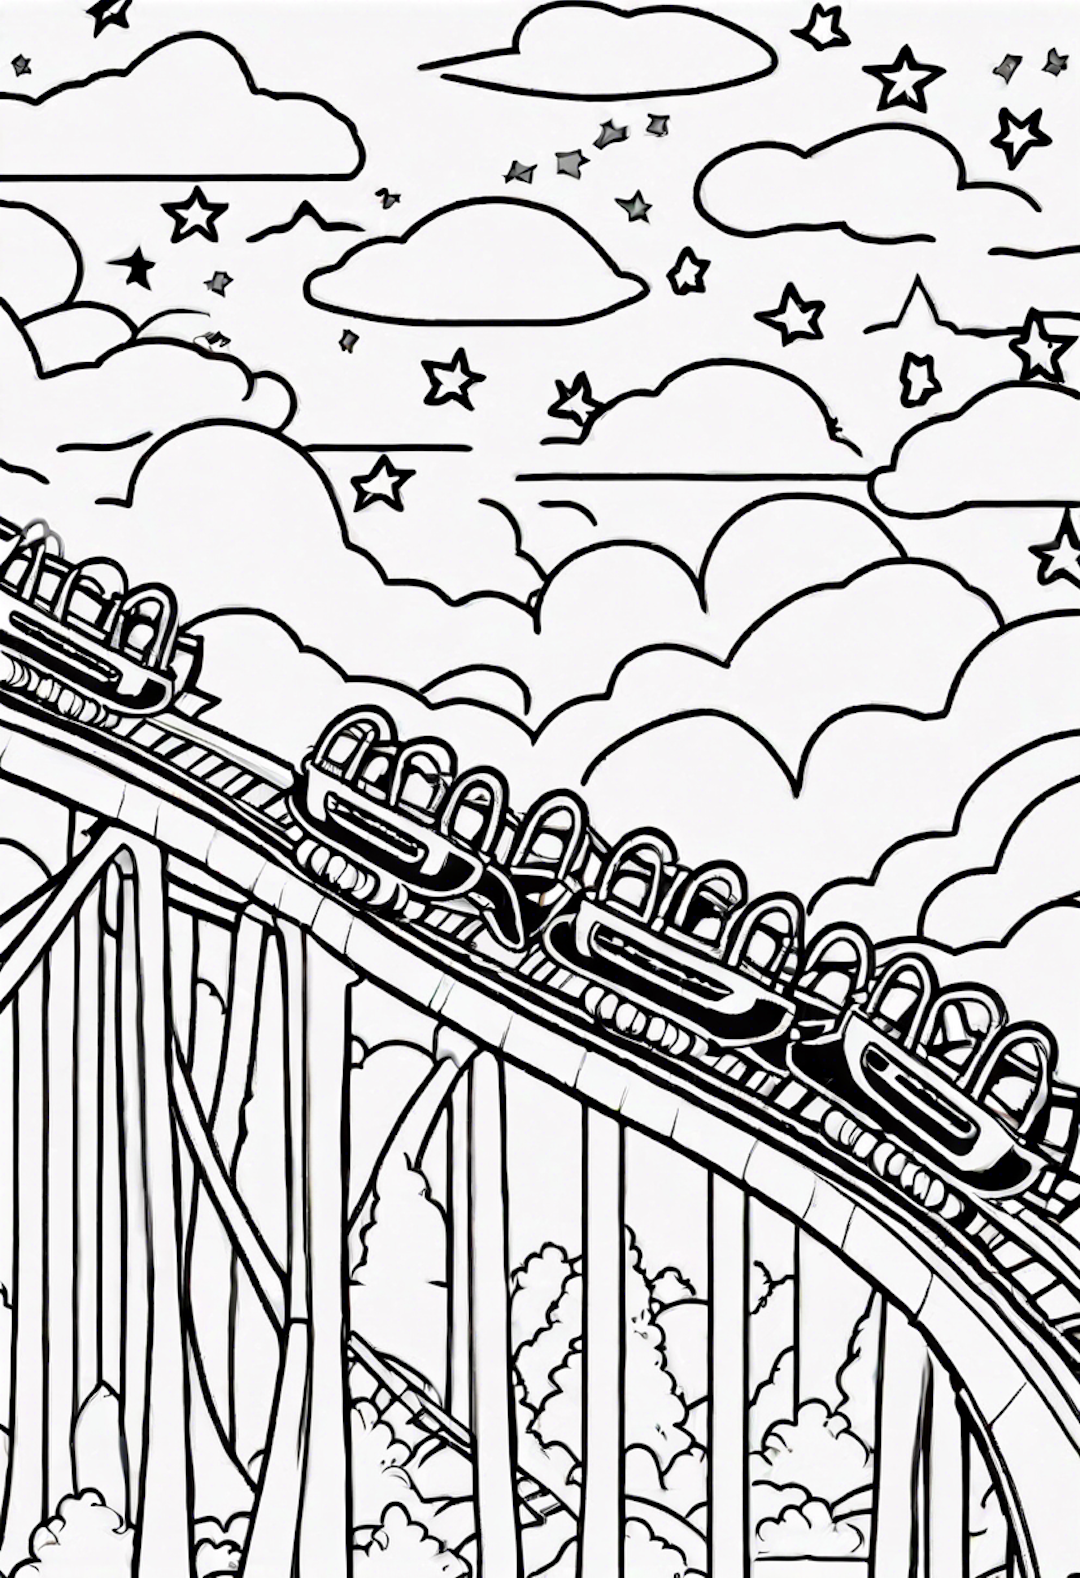 Eight Joyful Stars Riding Rollercoasters In The Sky